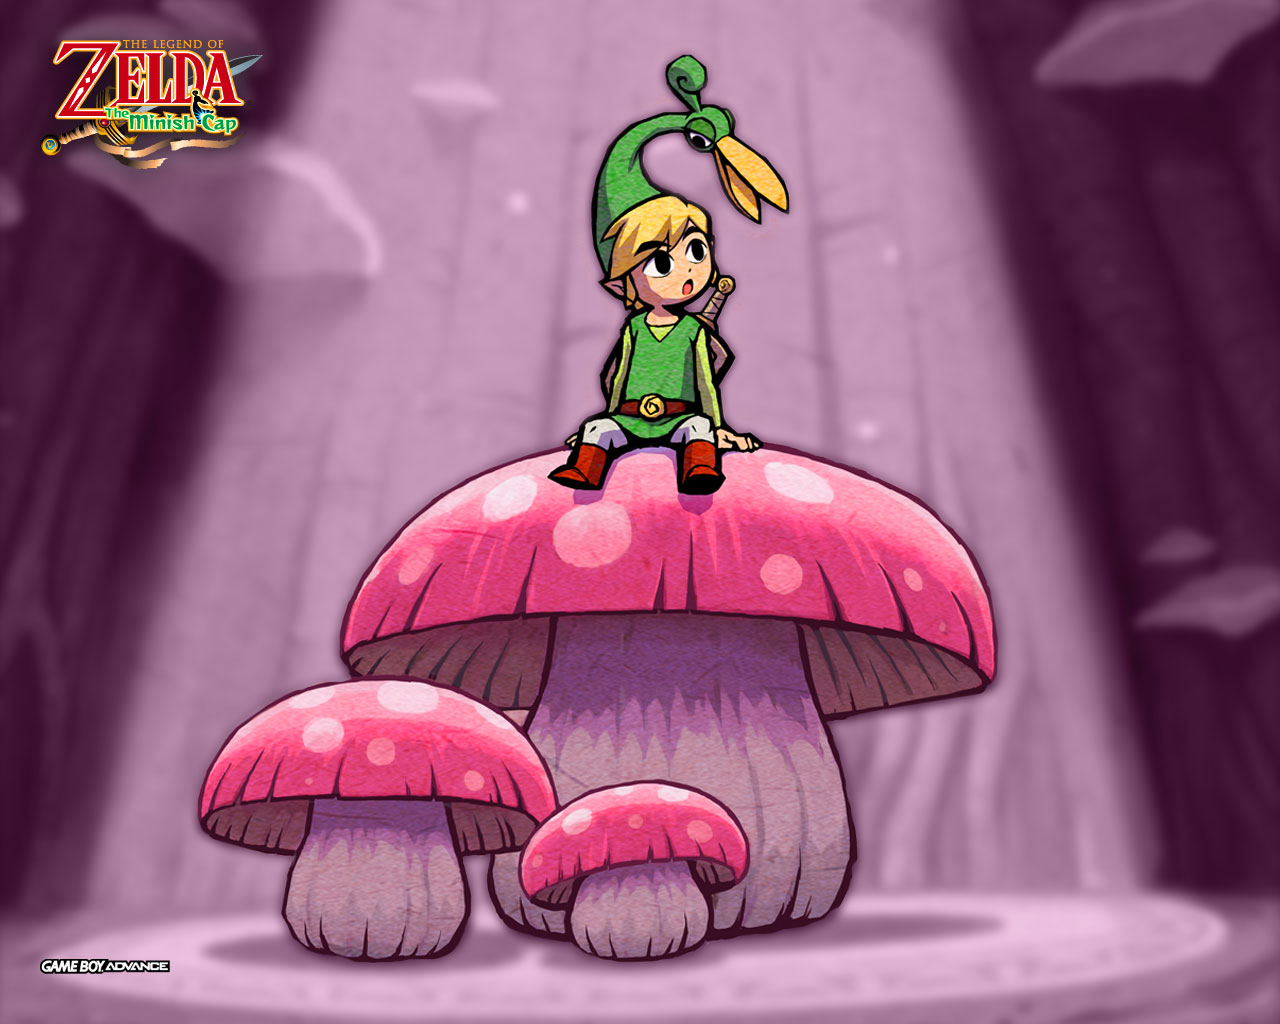 The Legend Of Zelda: The Minish Cap Backgrounds on Wallpapers Vista